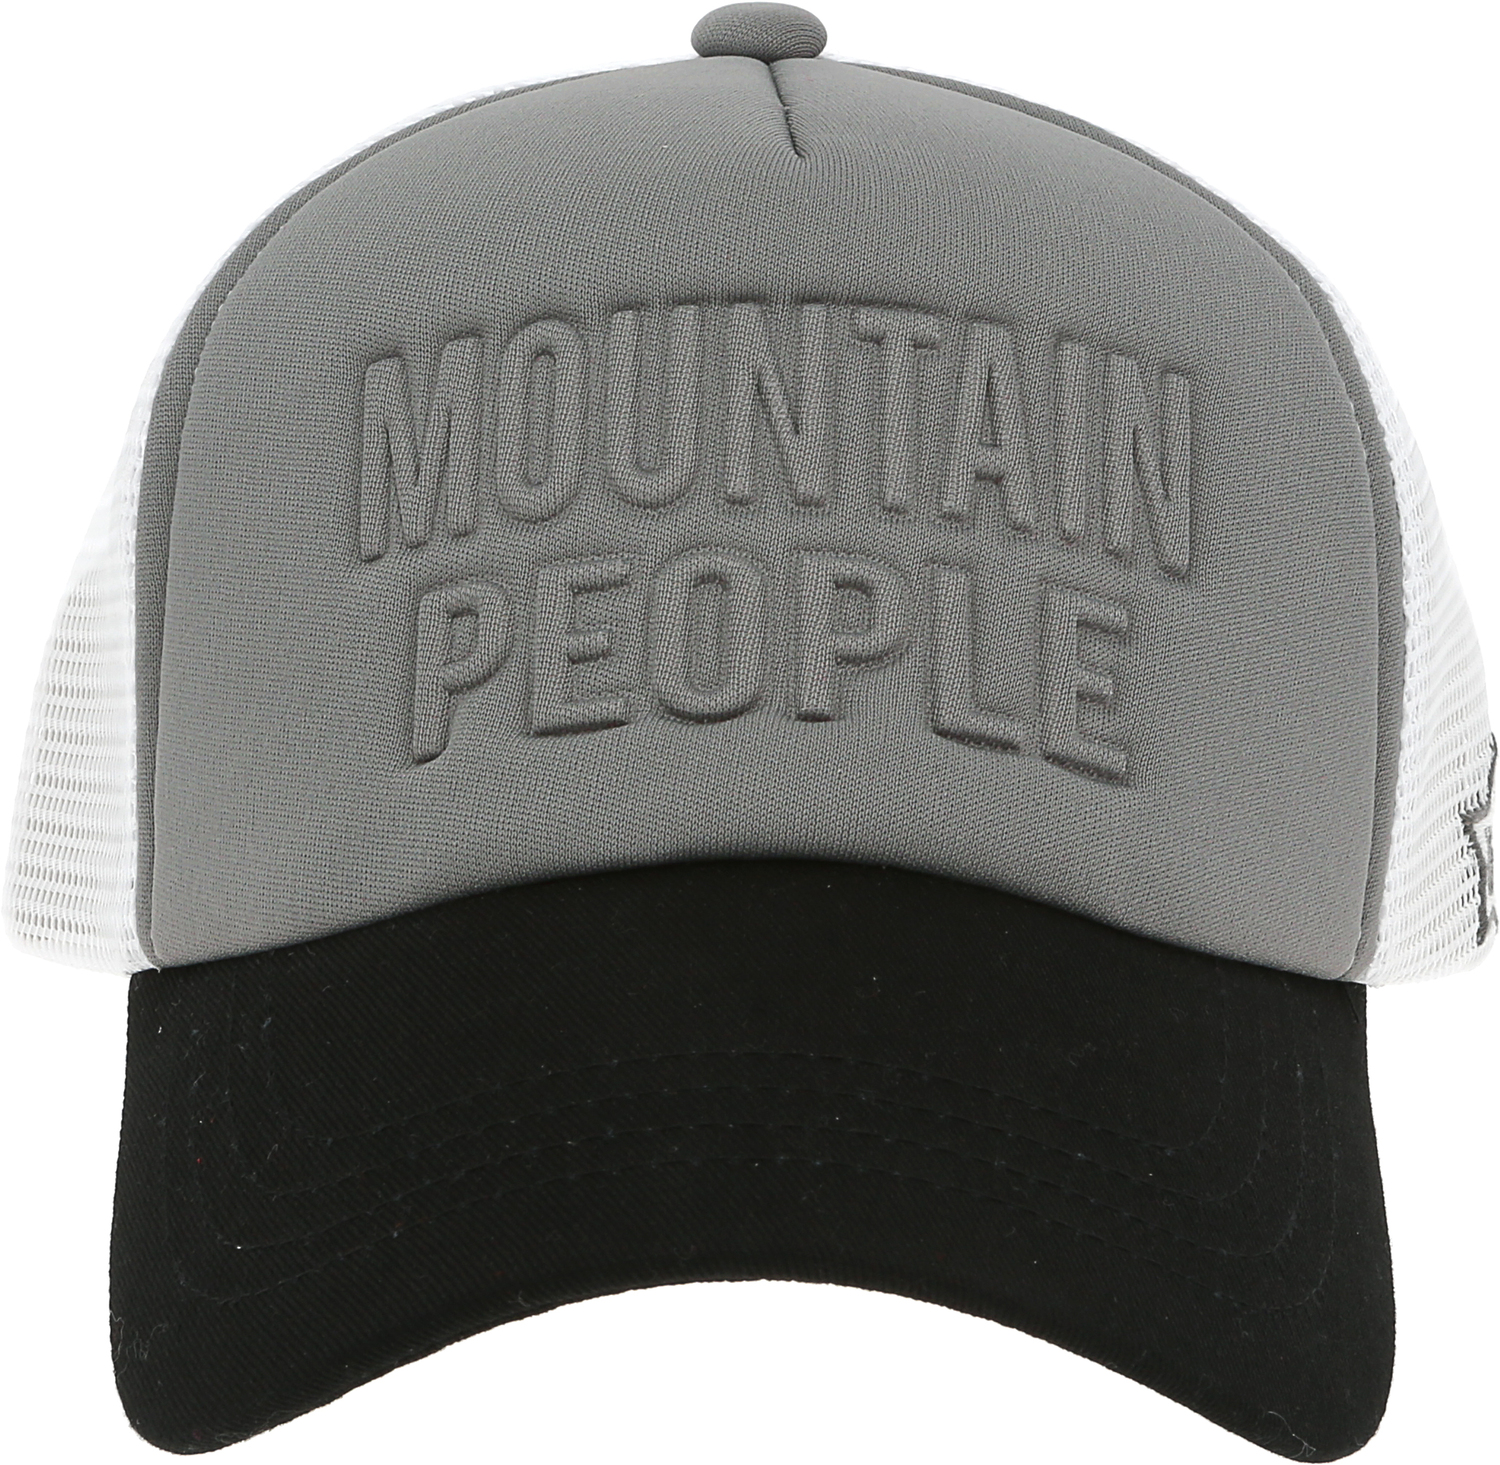 Mountain People by We People - Mountain People - Adjustable Charcoal Neoprene Mesh Hat